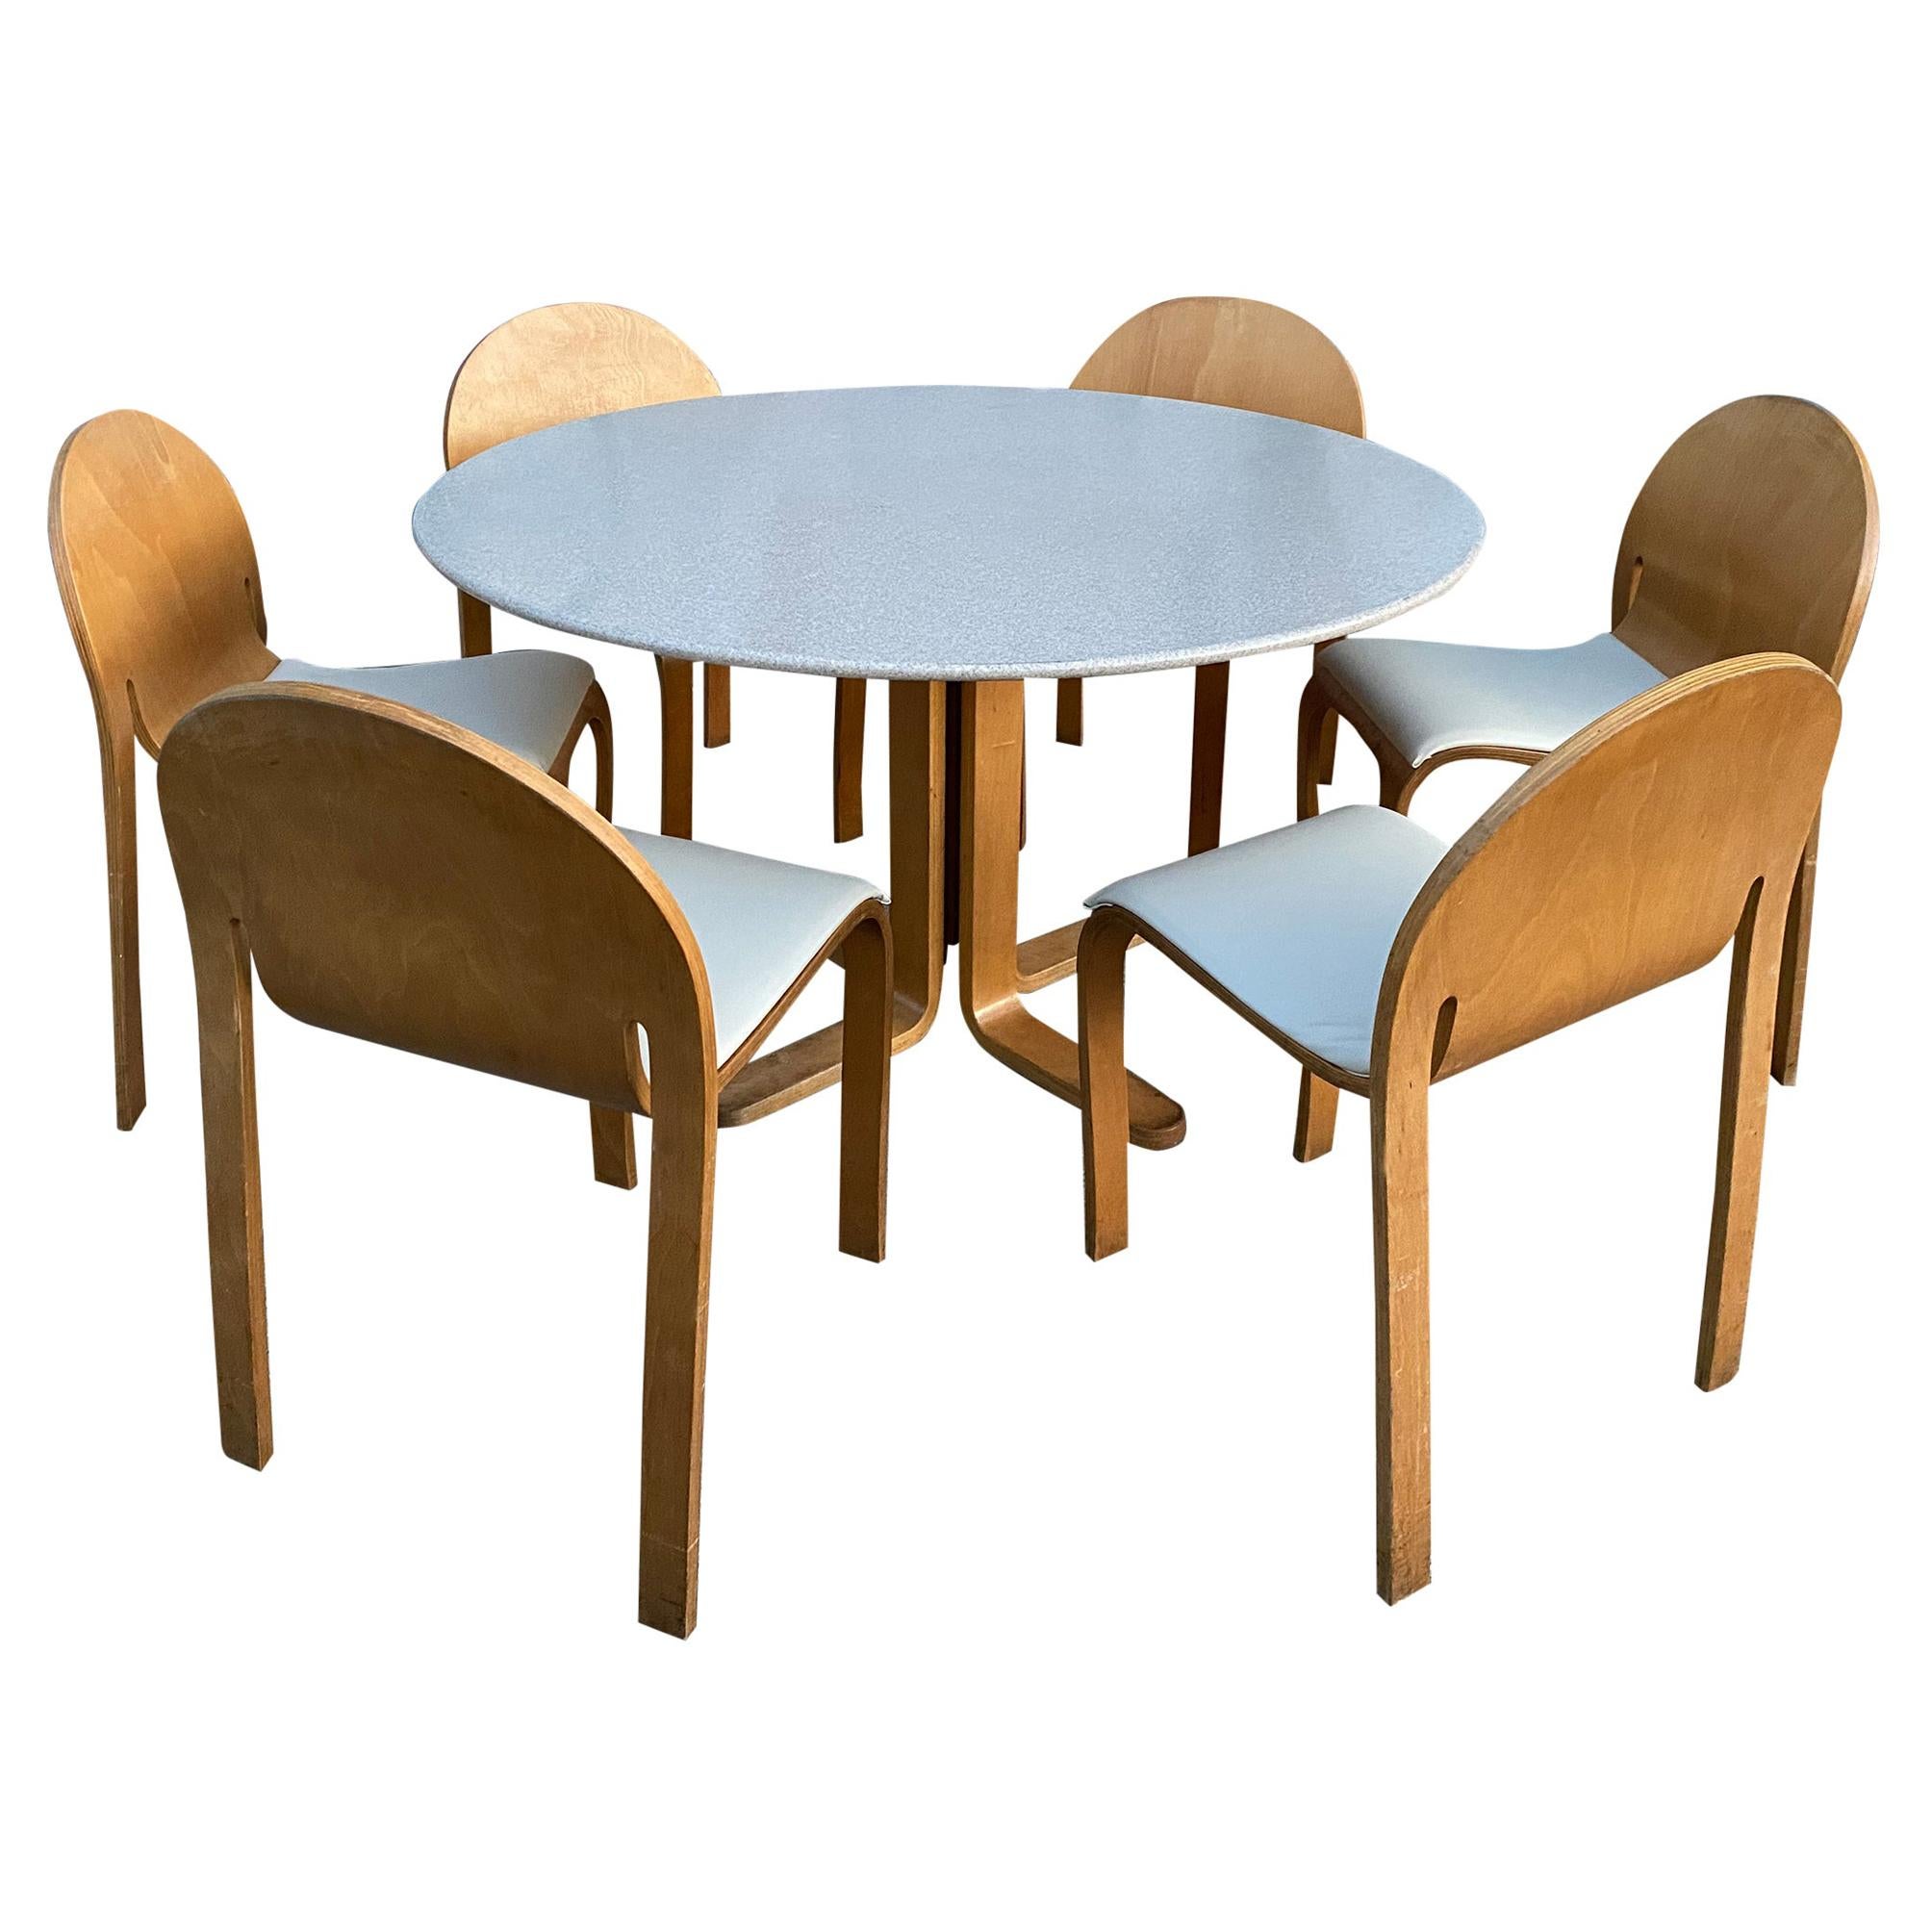 Rare Peter Danko Design Mid-Century Modern Dining Table '6' Chairs Bent Wood